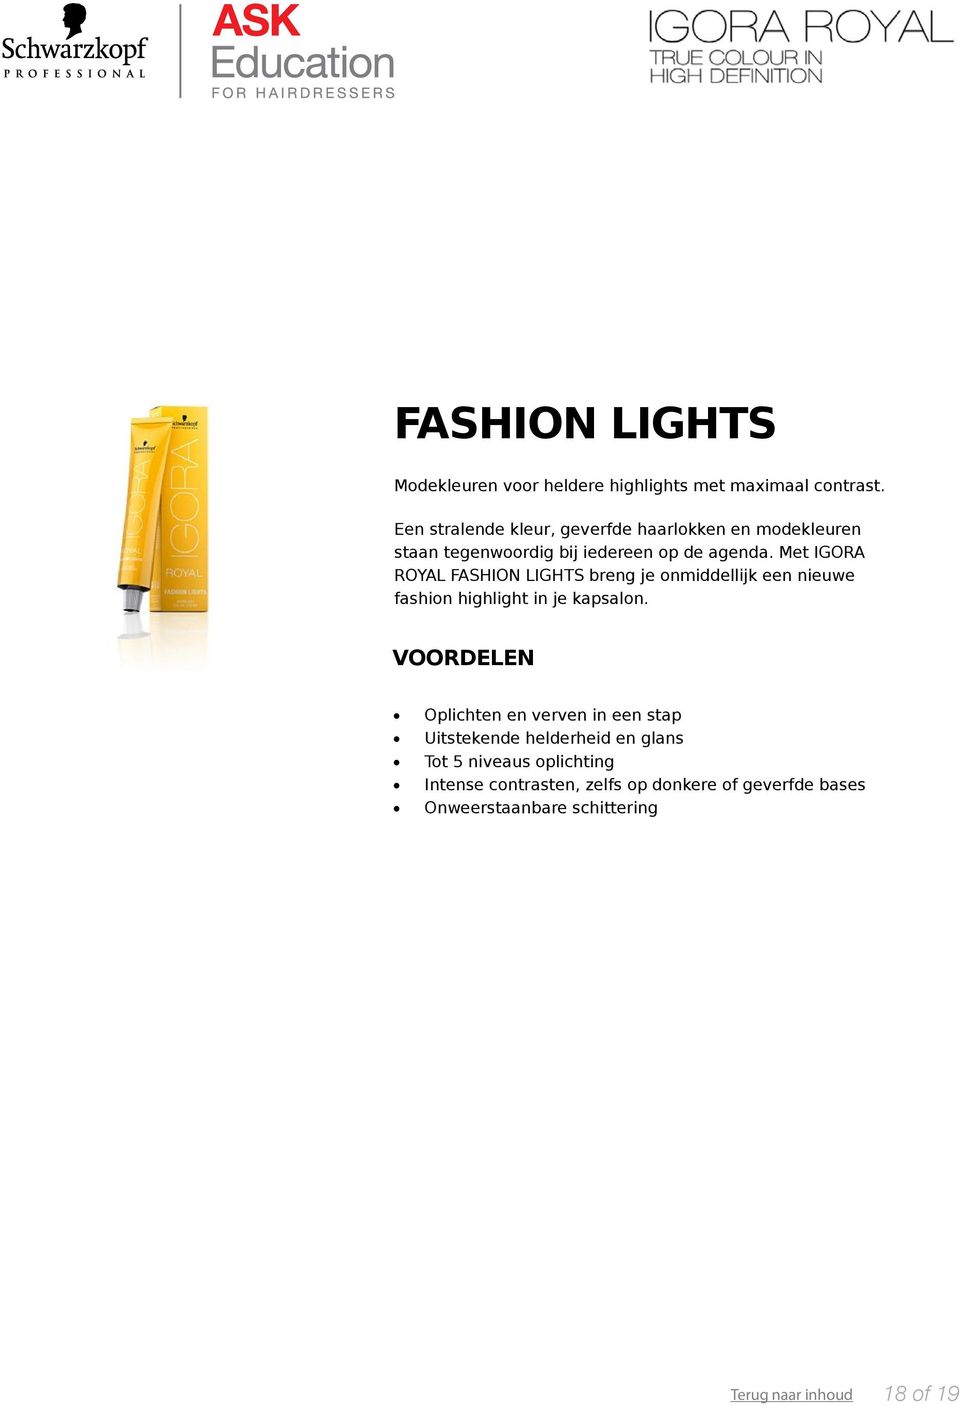 Met IGORA ROYAL FASHION LIGHTS breng je onmiddellijk een nieuwe fashion highlight in je kapsalon.